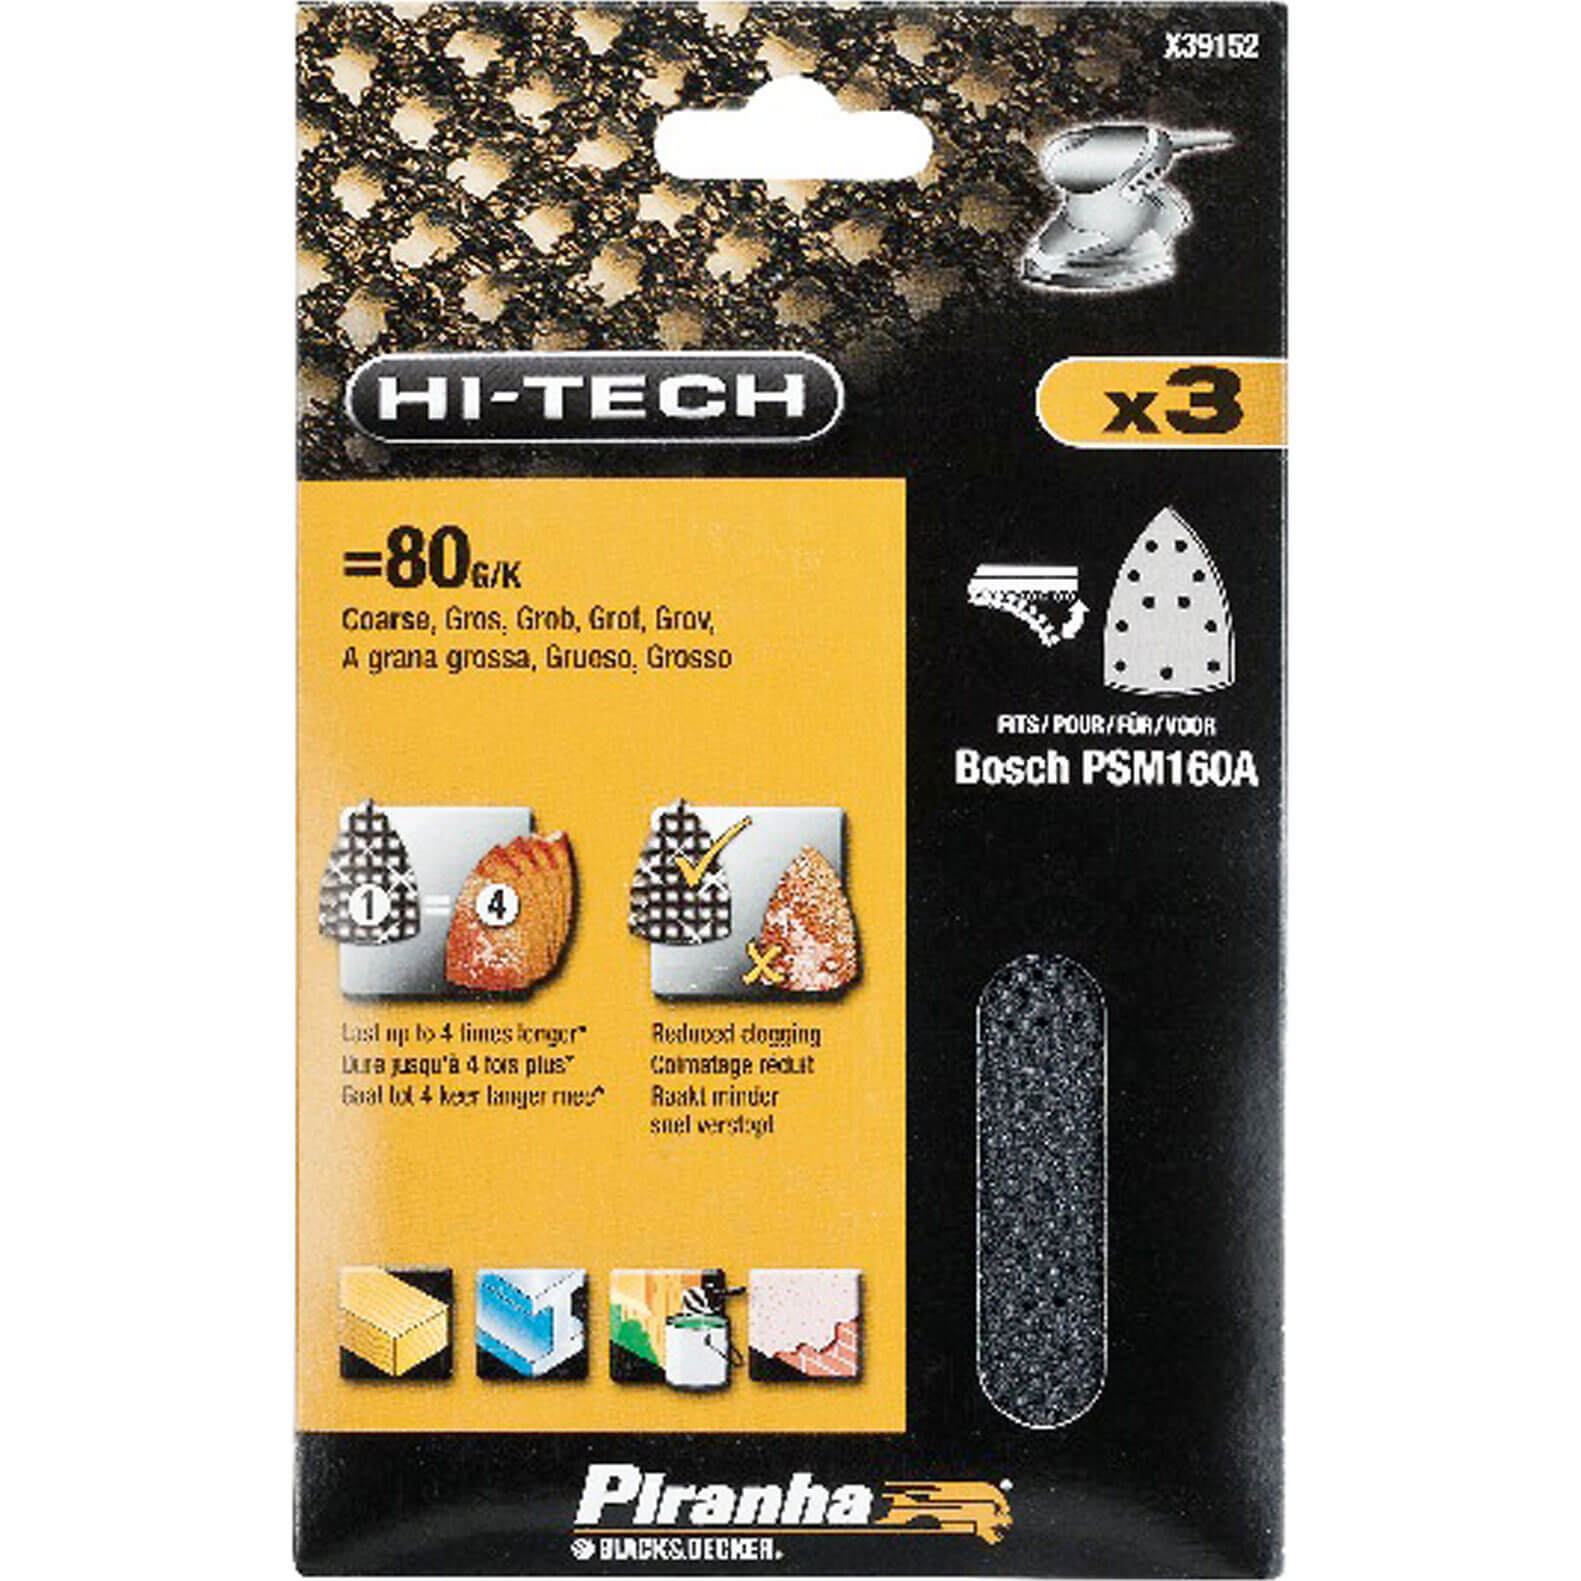 Image of Black and Decker Piranha Hi Tech Quick Fit Multi Sander Delta Sanding Sheets 120g Pack of 3